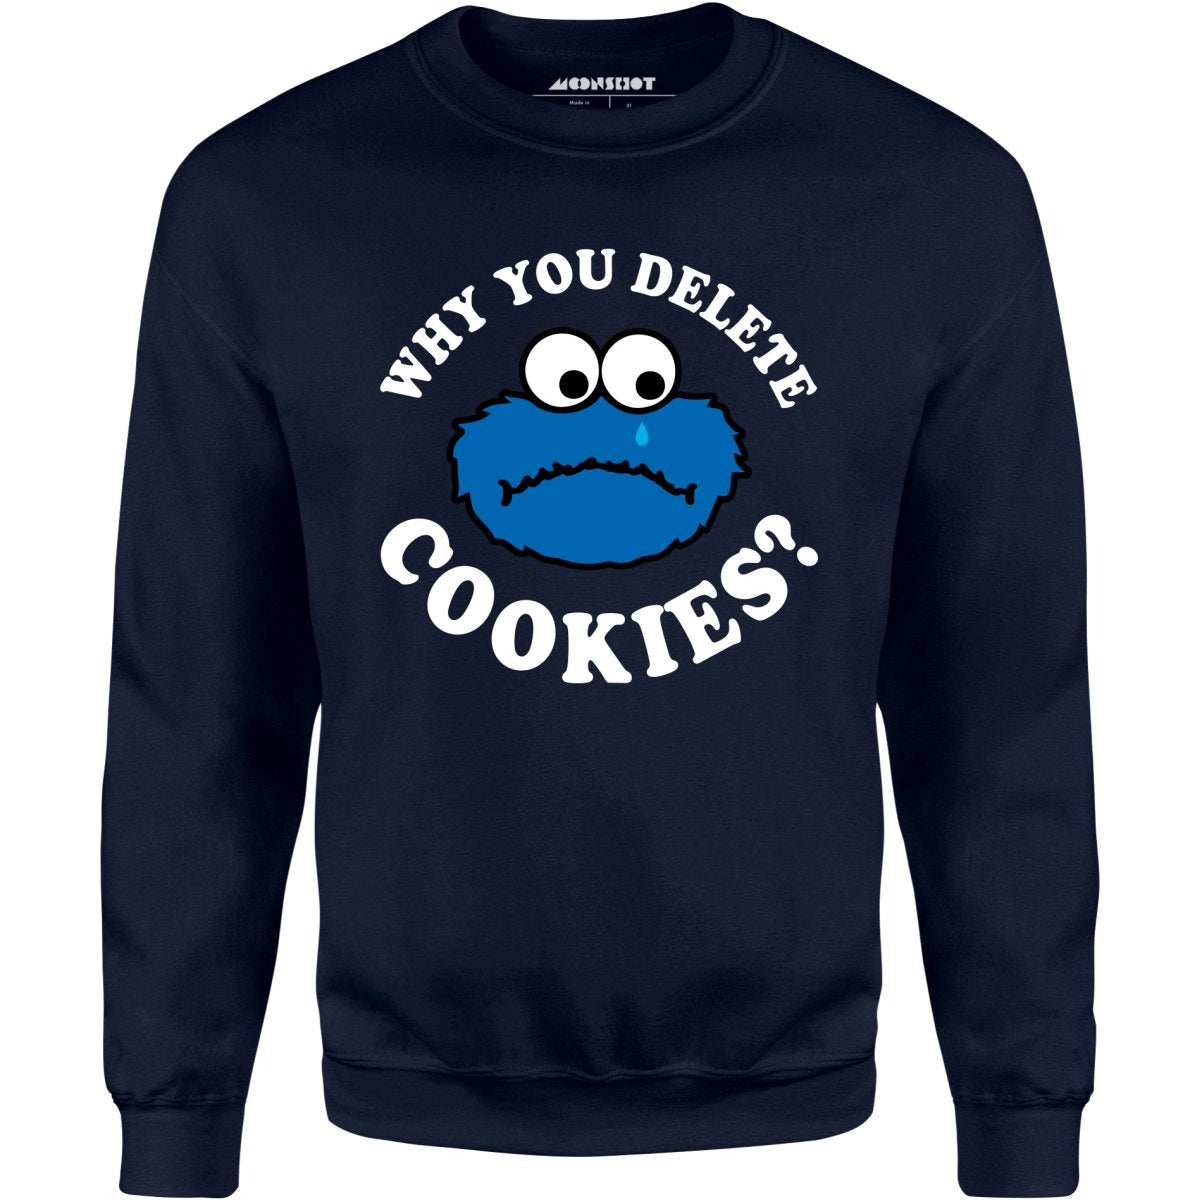 Why You Delete Cookies? - Unisex Sweatshirt